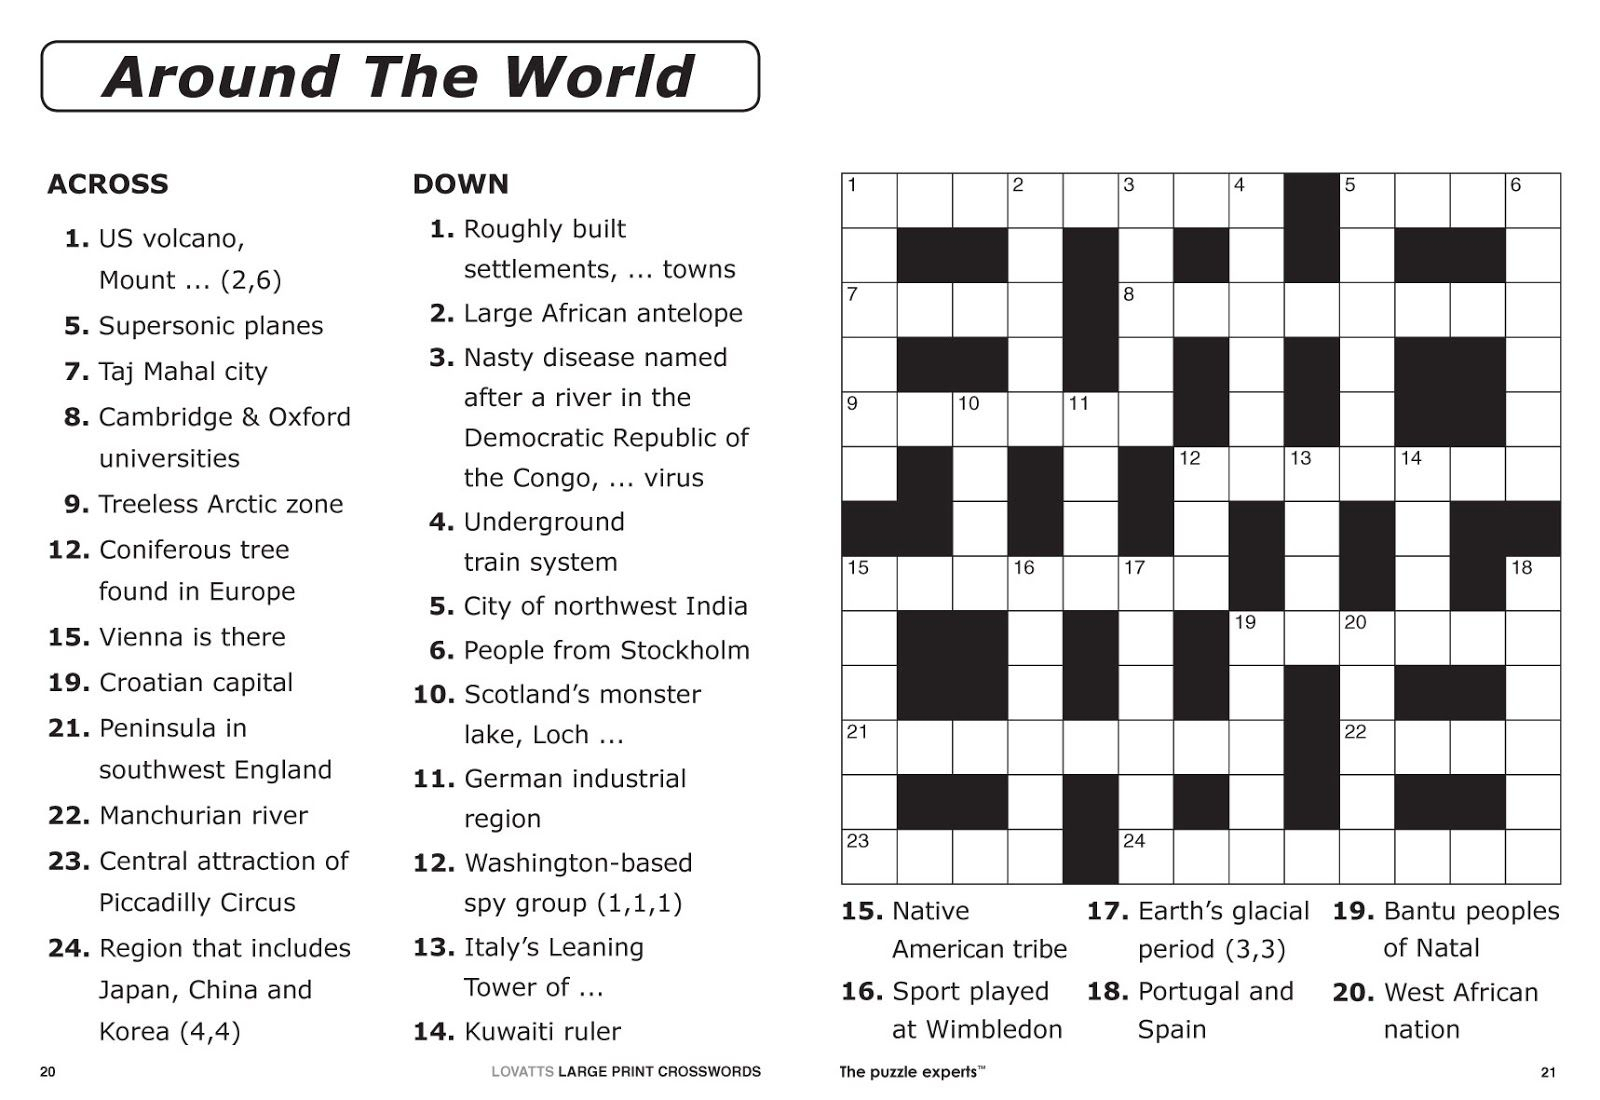 Free Printable Large Print Crossword Puzzles | M3U8 - Printable Crossword Puzzles By Topic